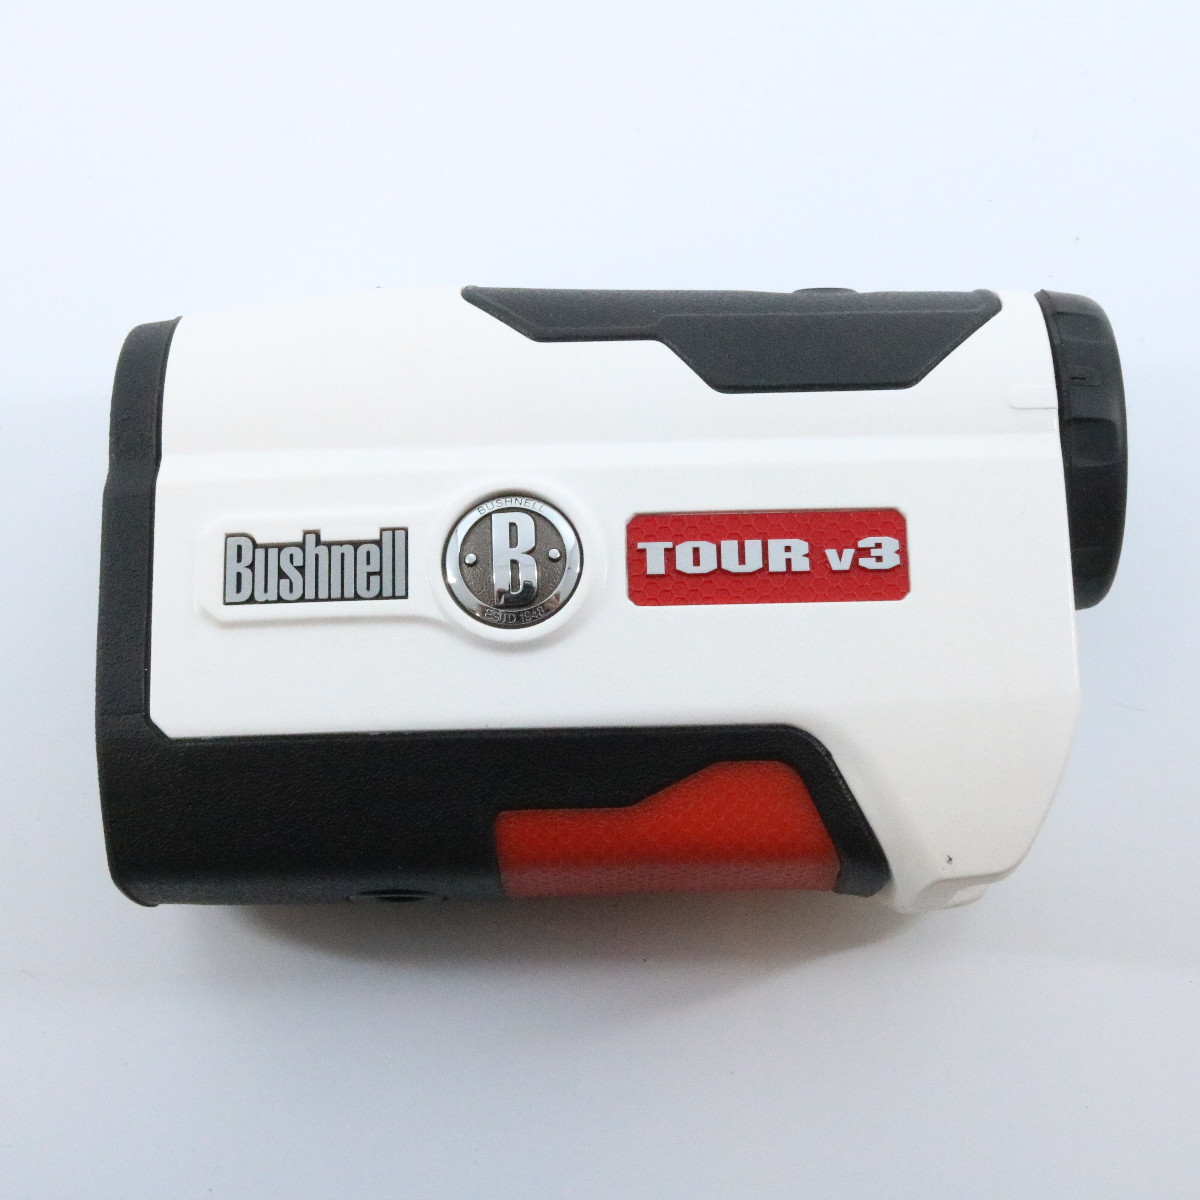 bushnell tour v3 battery change